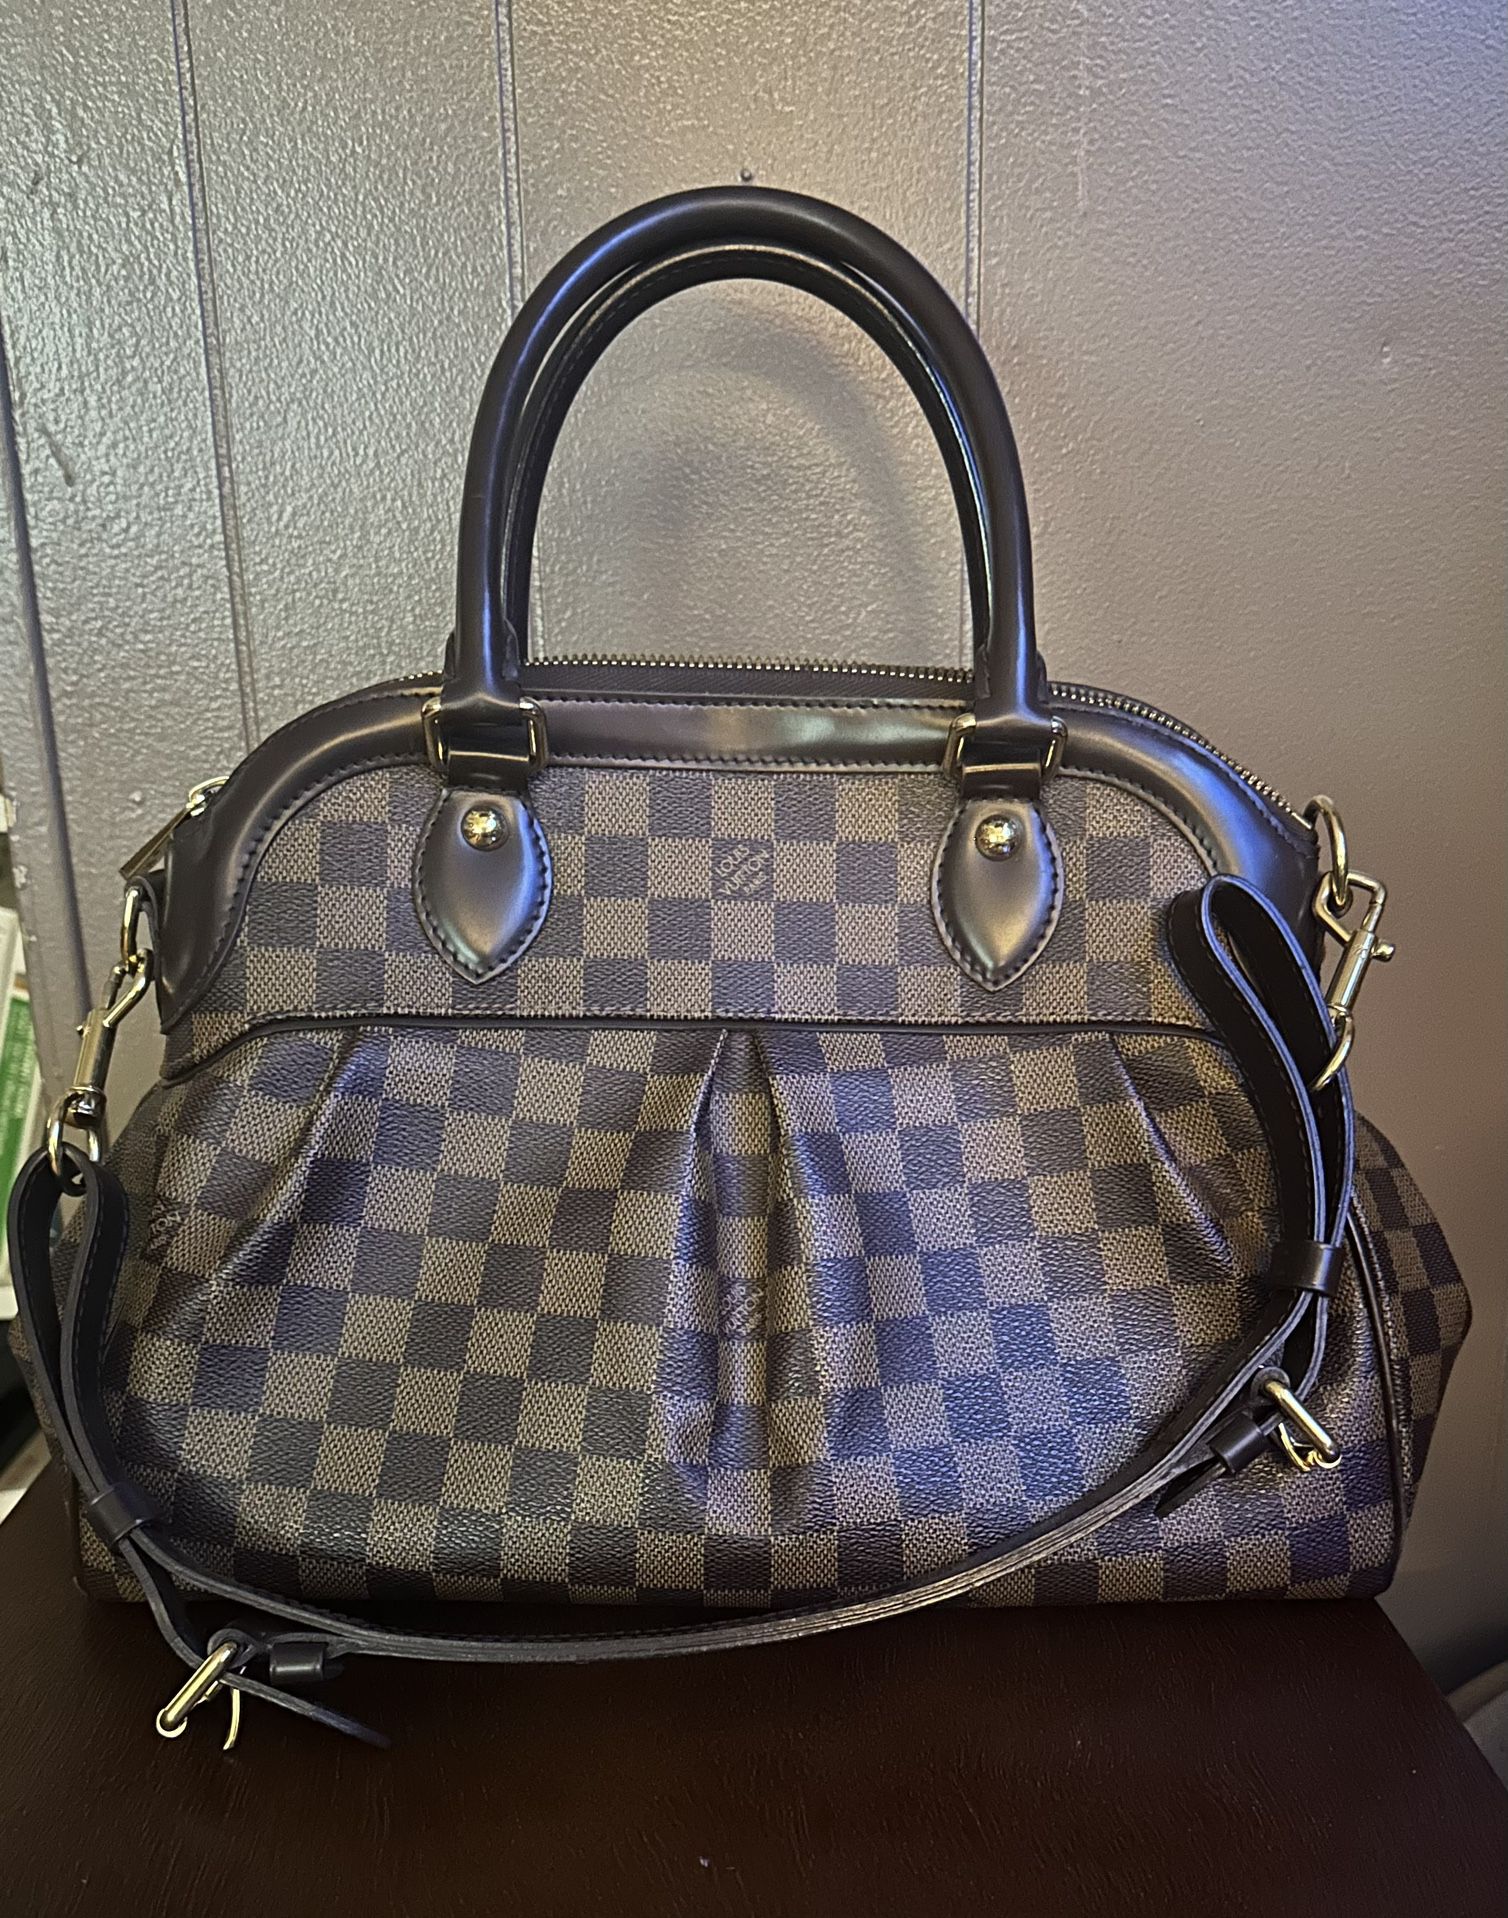 Authentic LV Handbag 